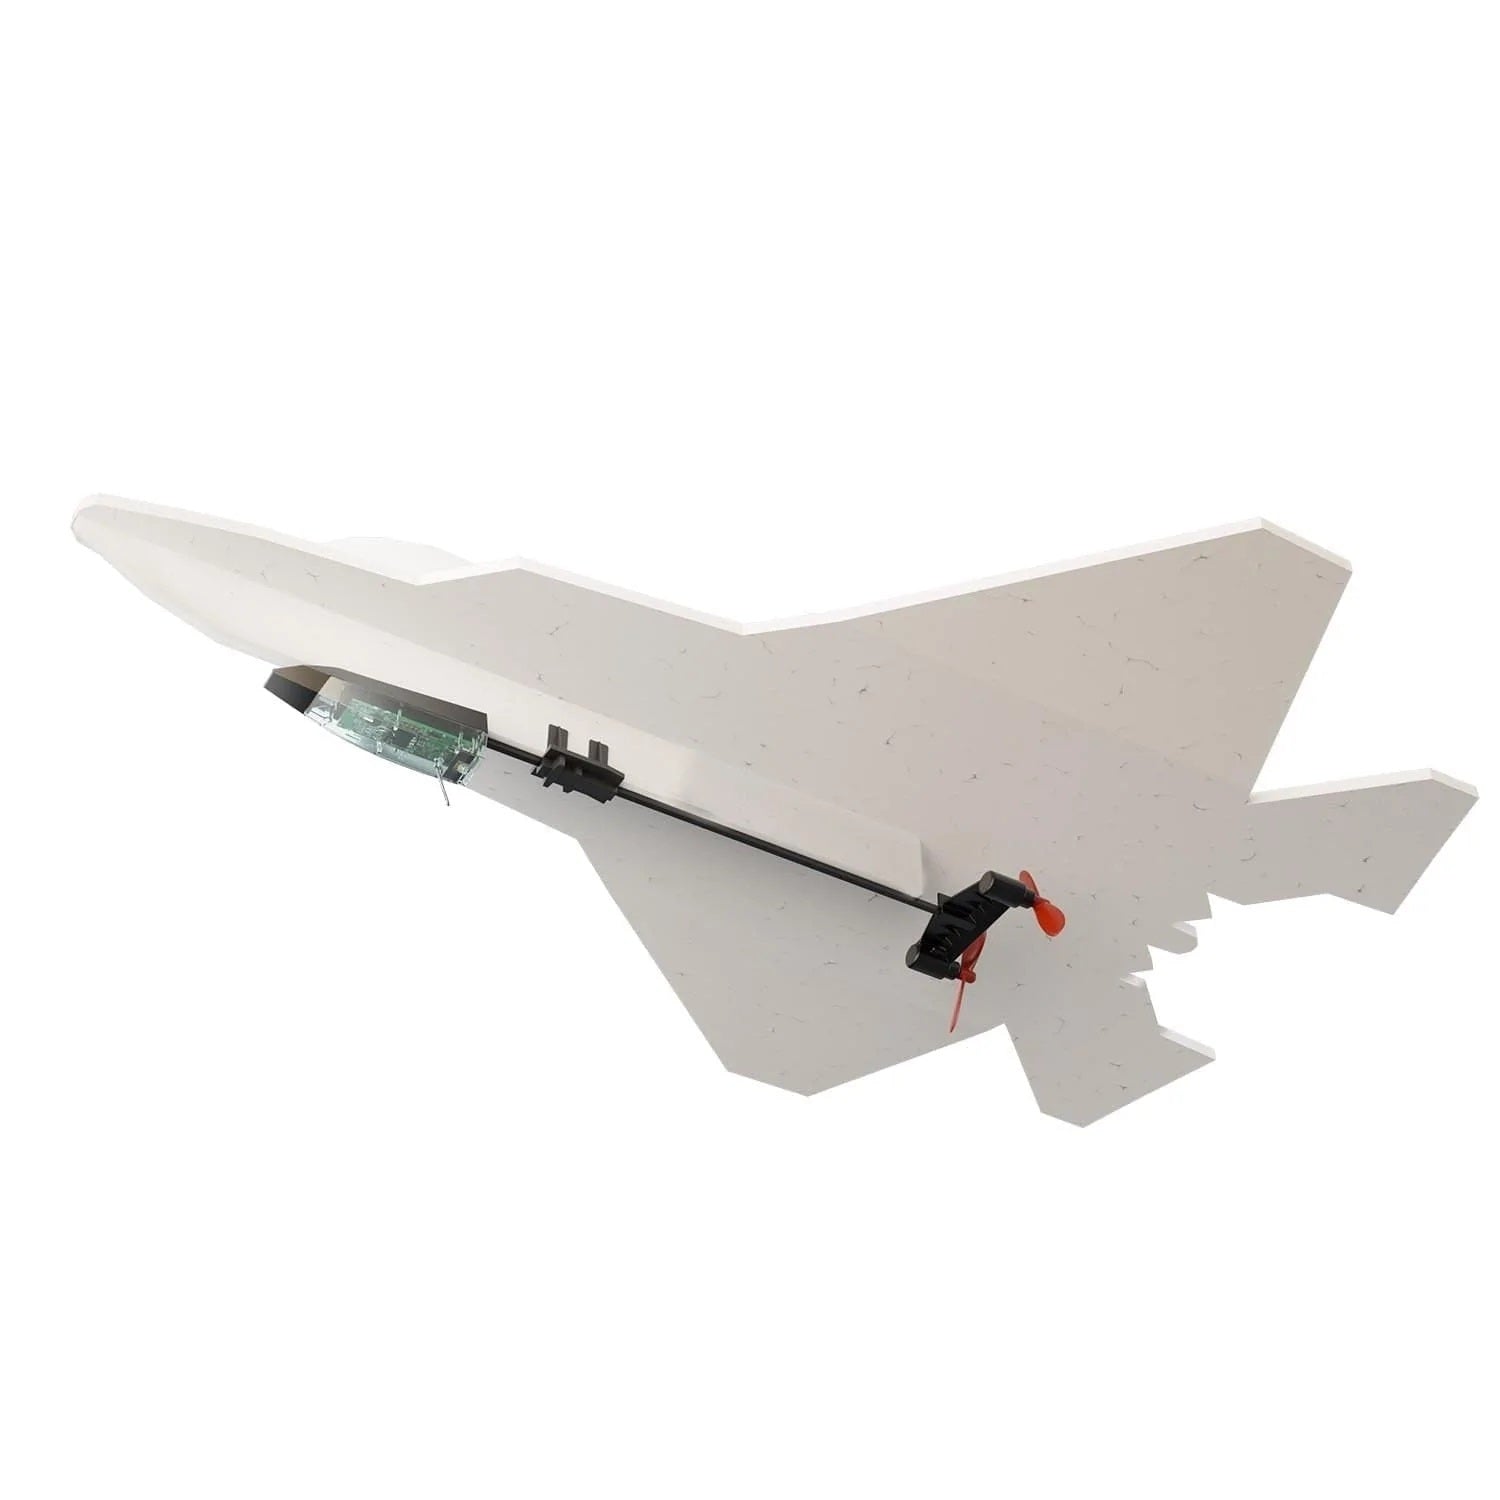 POWERUP® F22 Raptor® Radio Control Airplane Kit - Micro - Mark Art & Crafting Materials